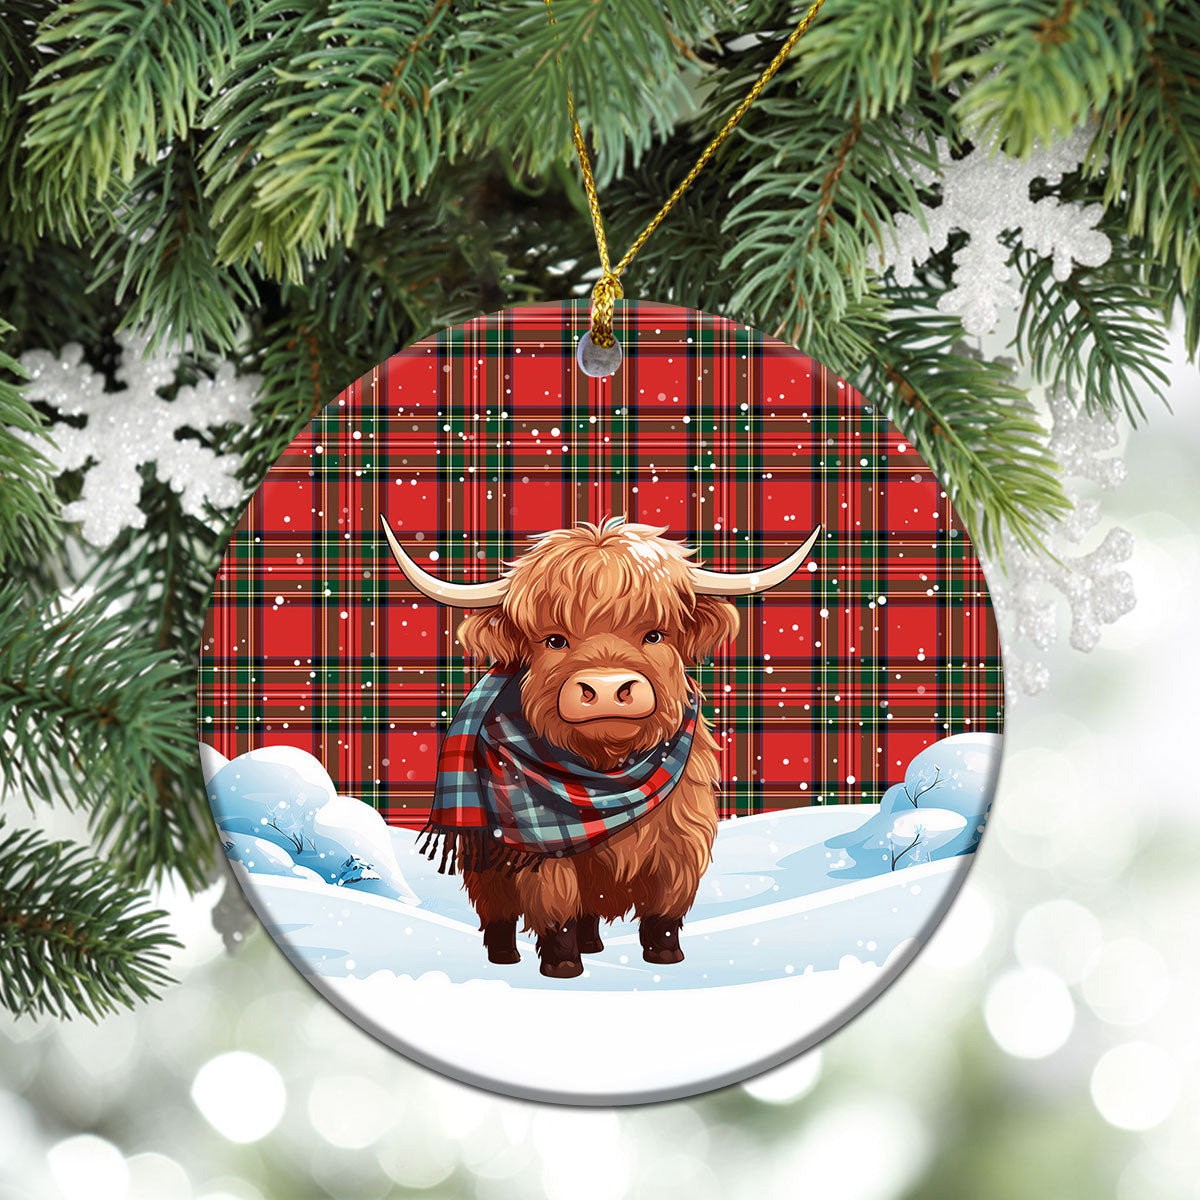 Monypenny Tartan Christmas Ceramic Ornament - Highland Cows Snow Style